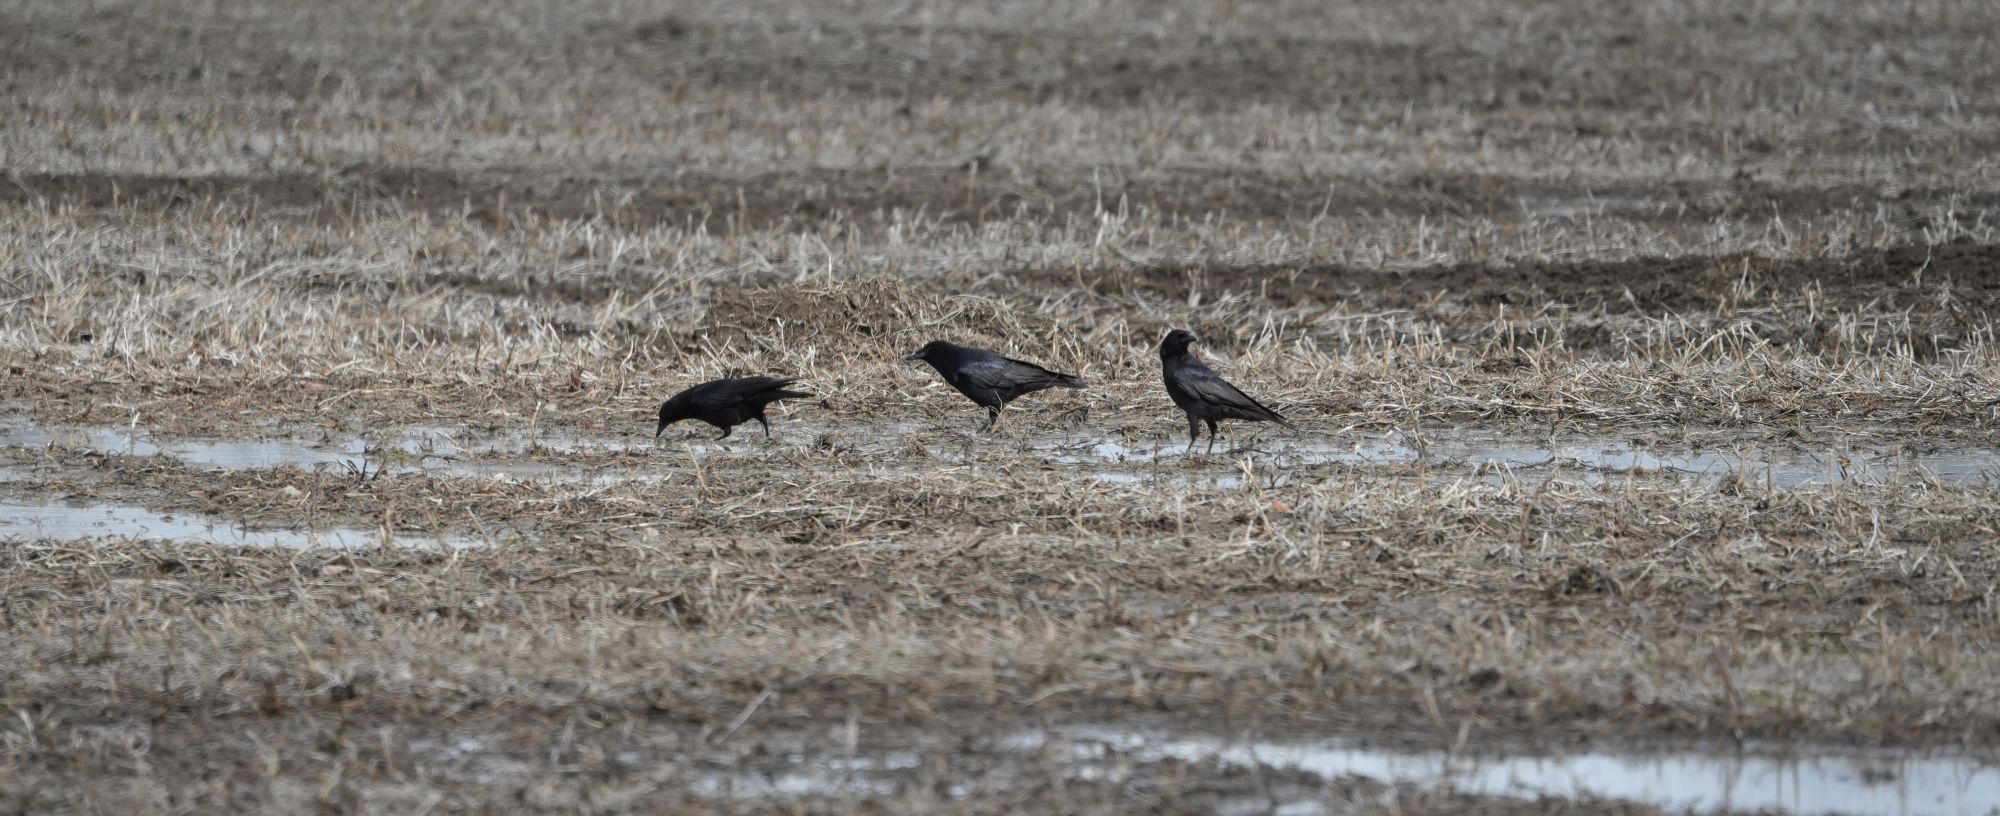 American Crows on farm field in March